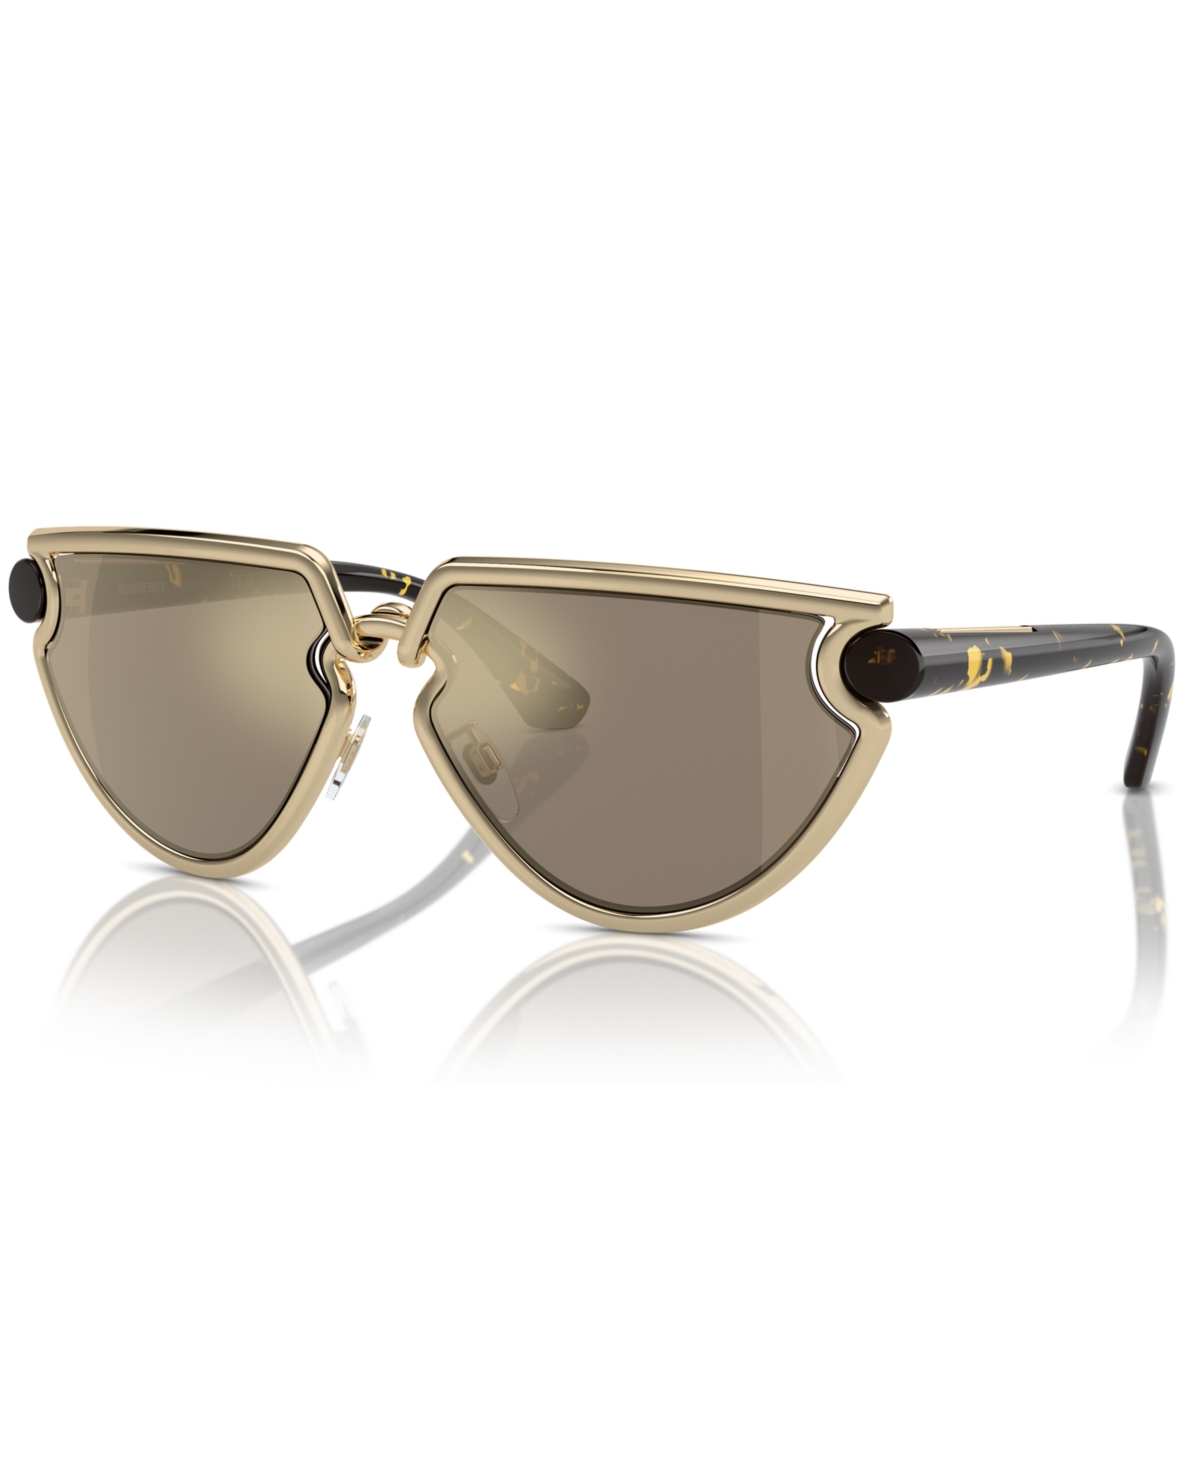 Women's Sunglasses, Be3152 - Light Gold